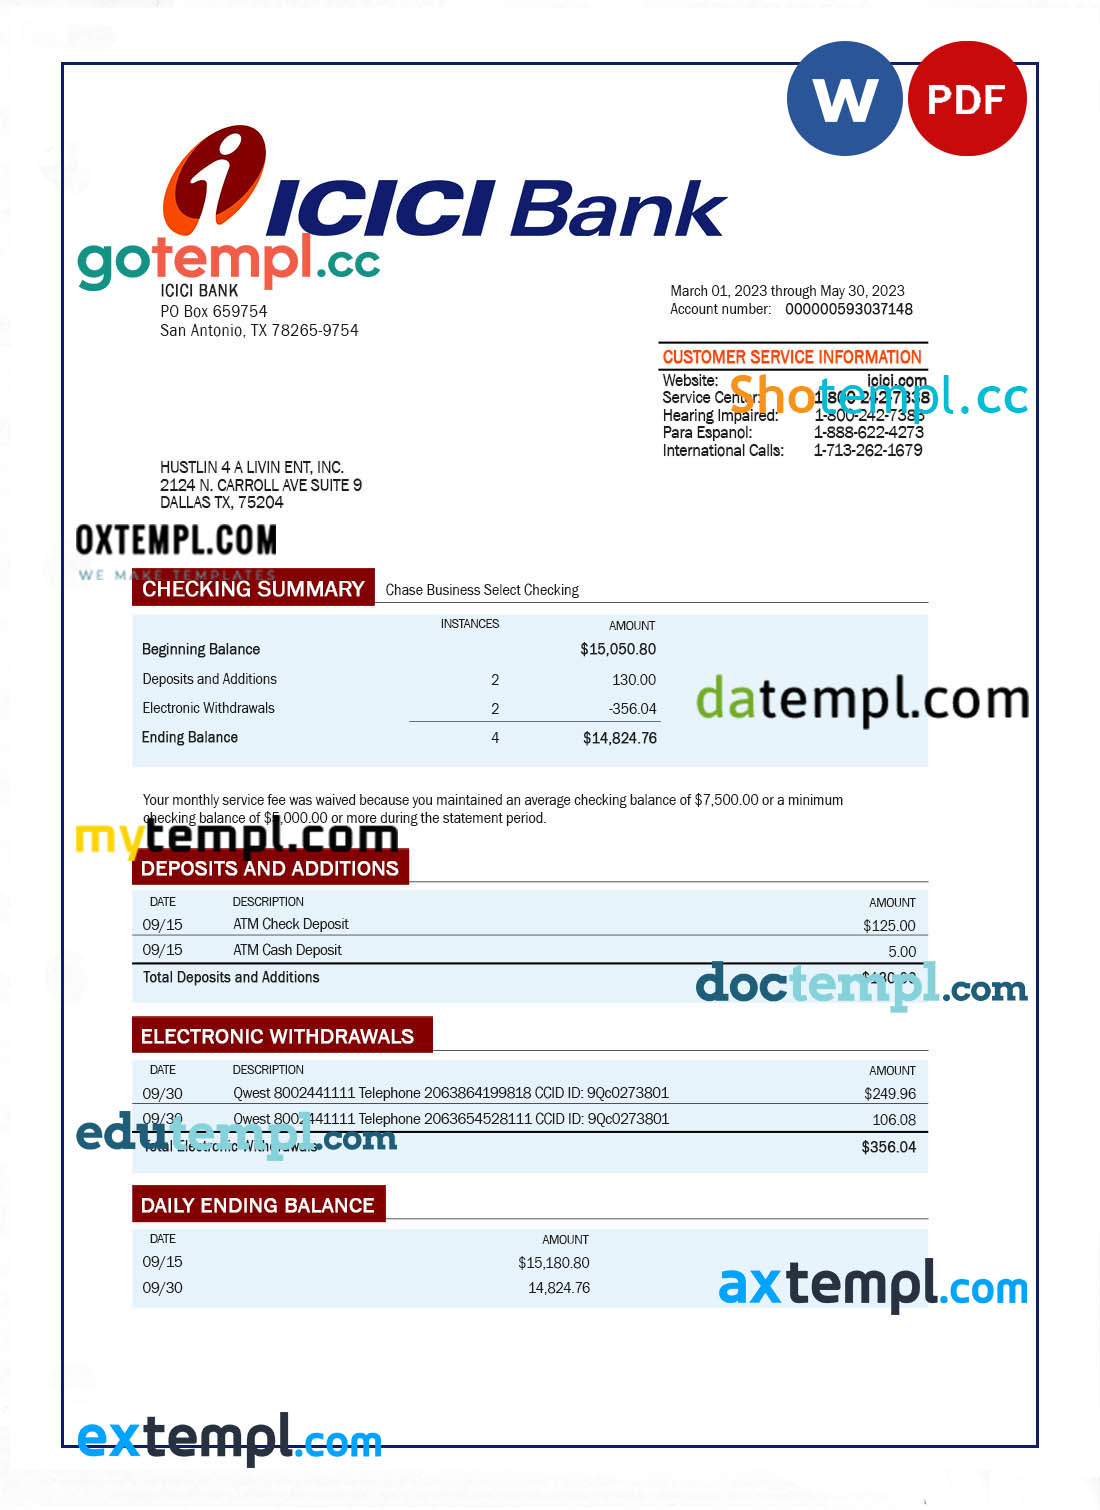 editable template, Belgium Crelan bank visa card debit card template in PSD format, fully editable